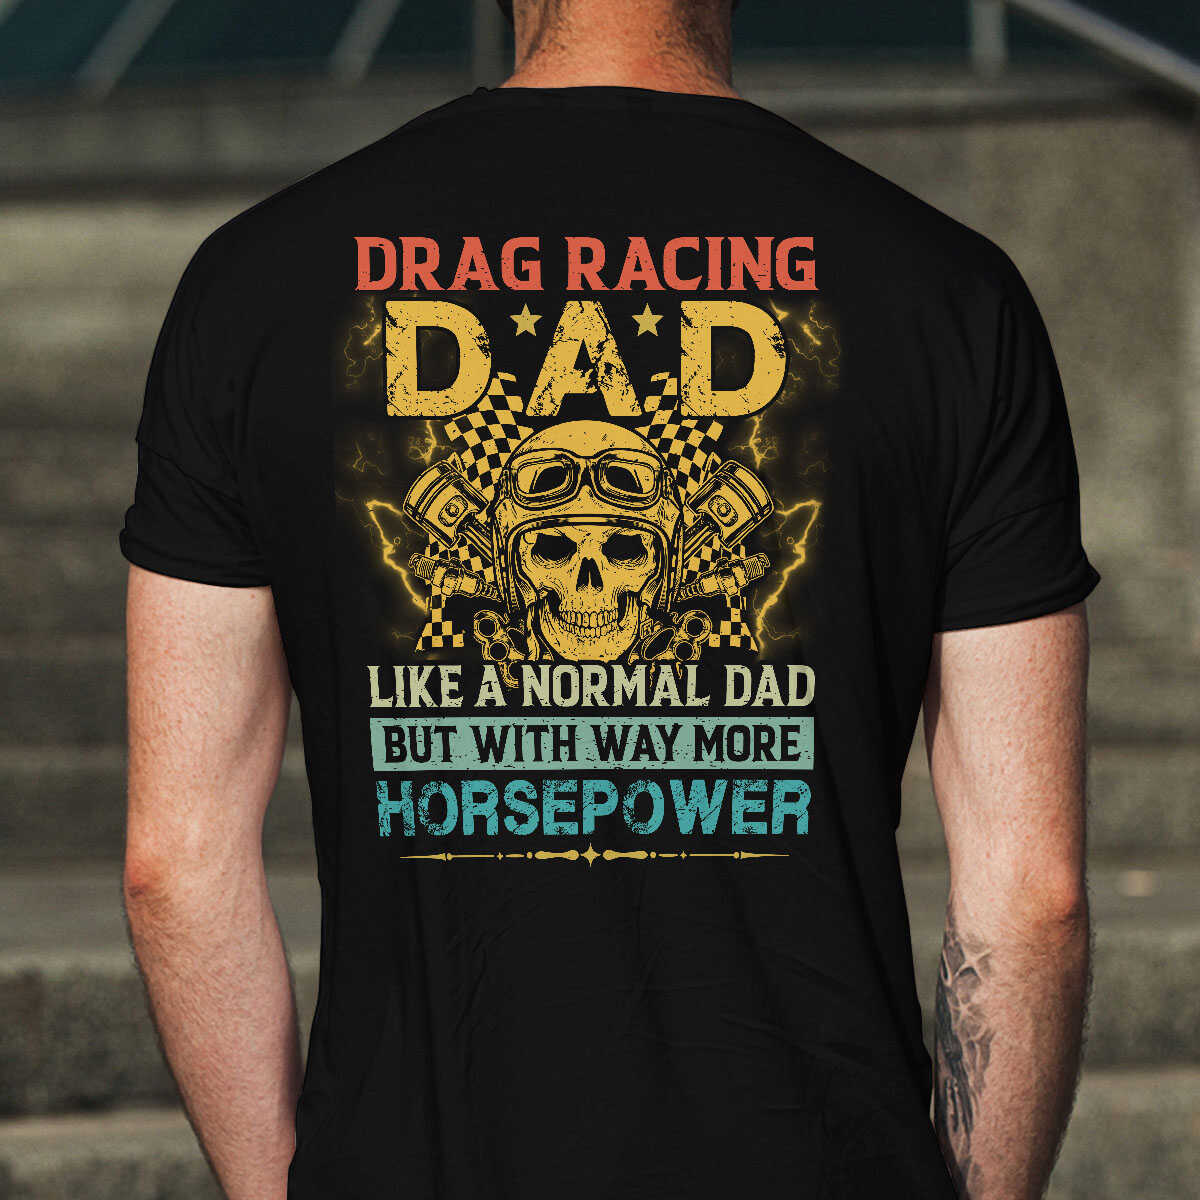 Drag Racing Dad T-shirt - Drag Racing Dad Has Way More Horsepower